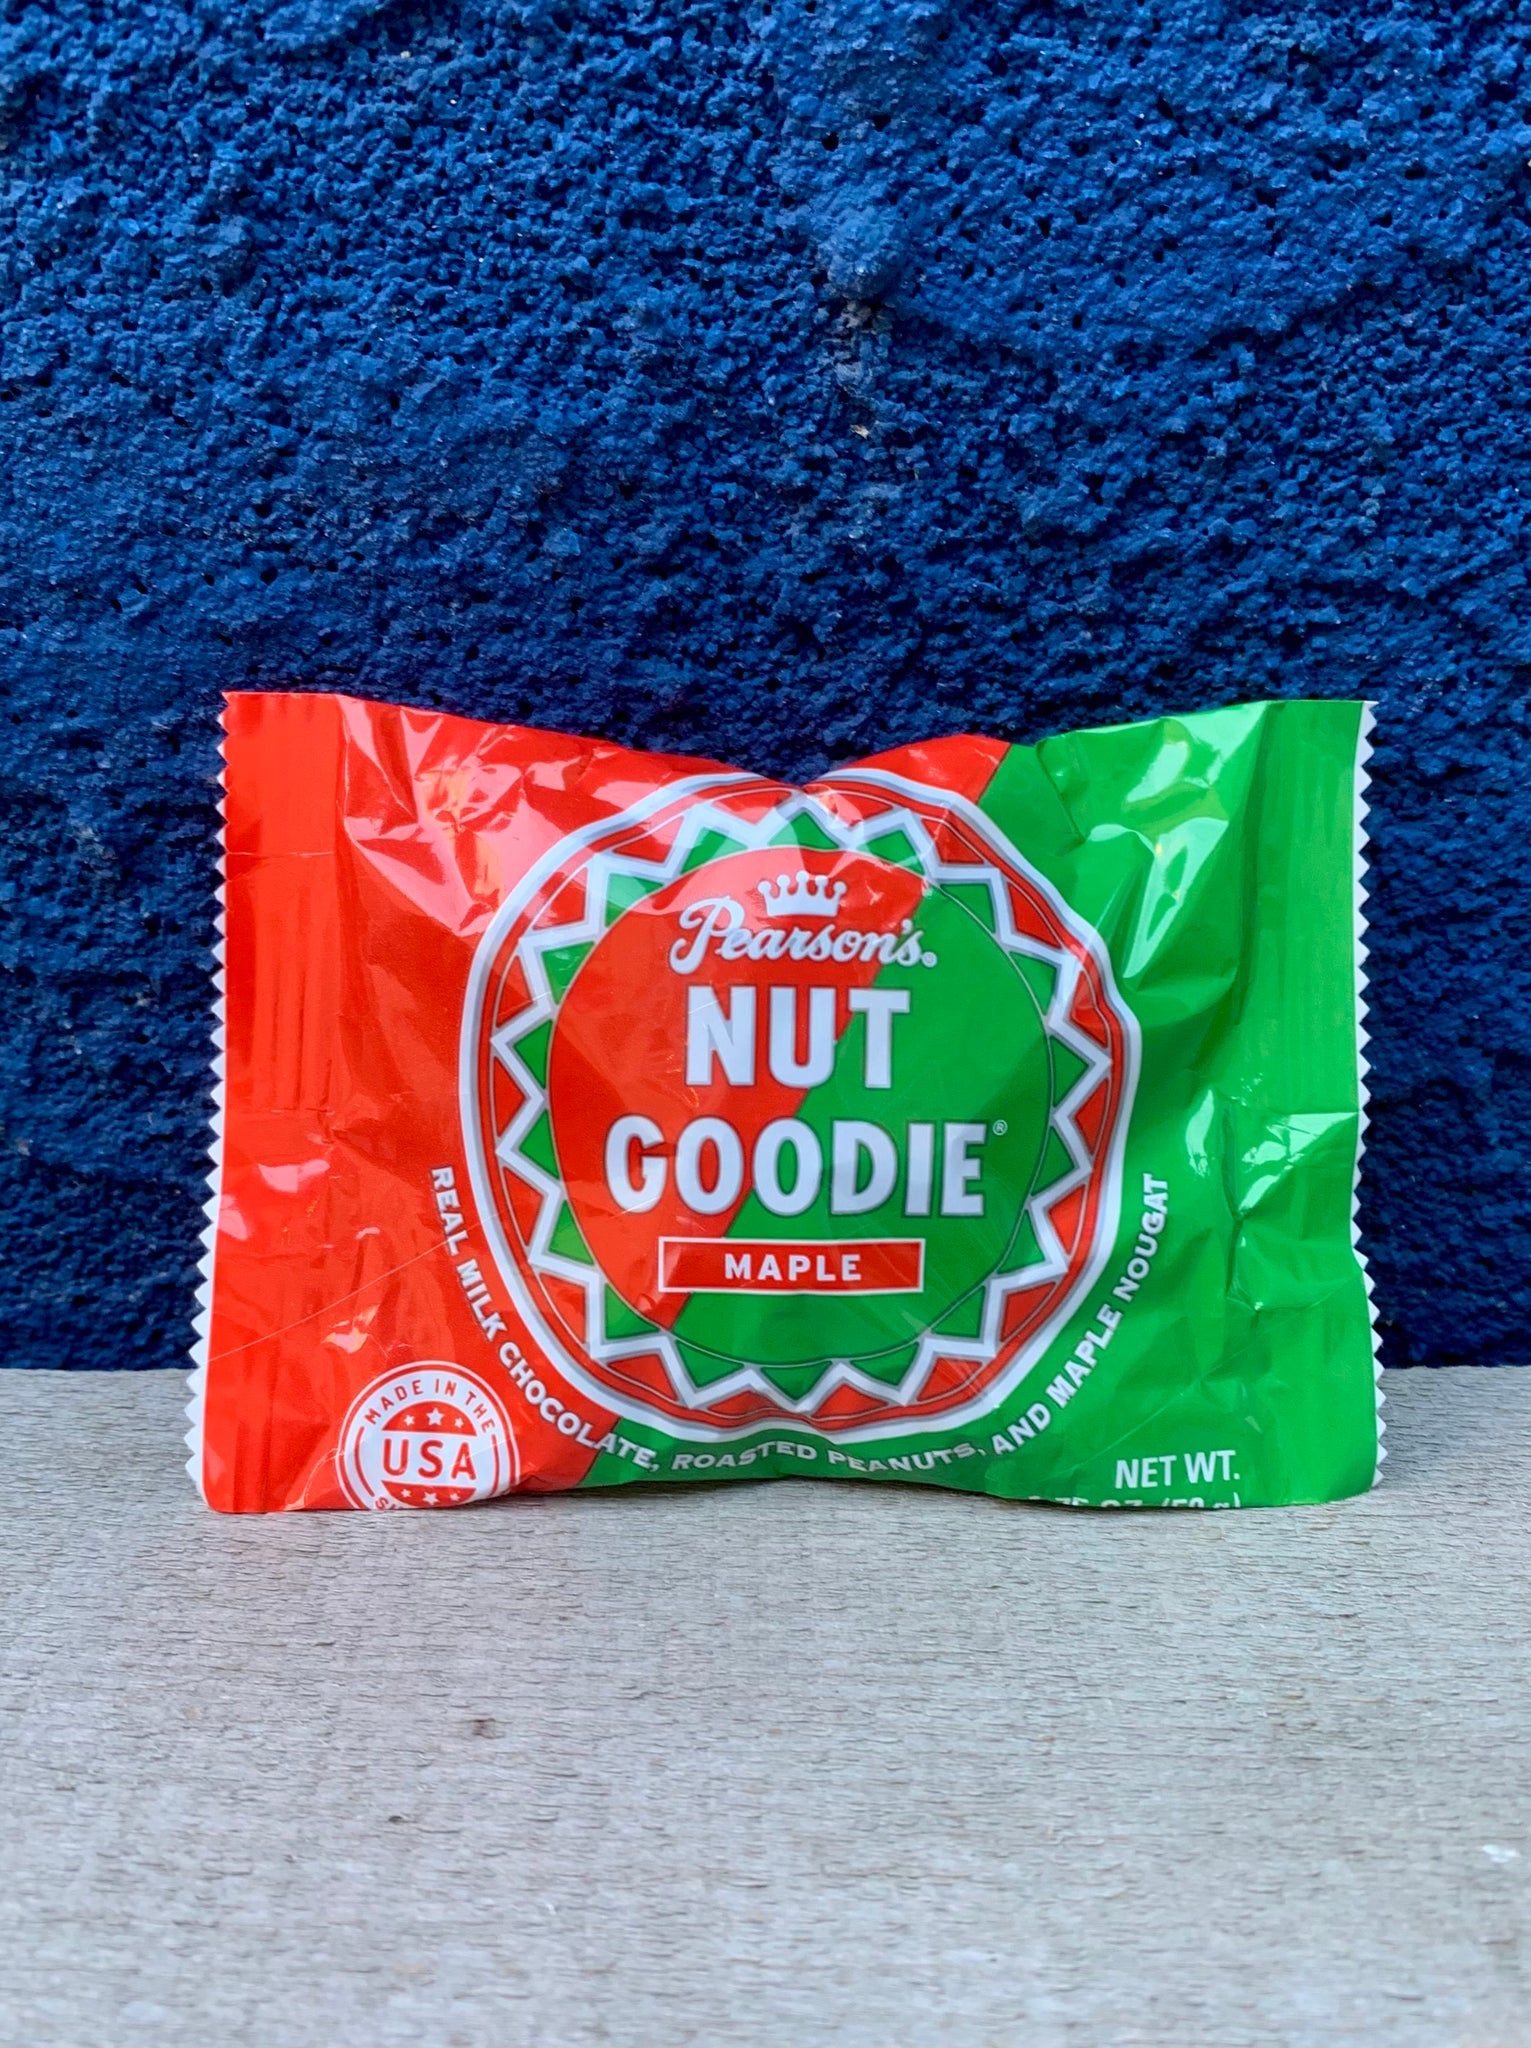 Nut Goodie - Maple